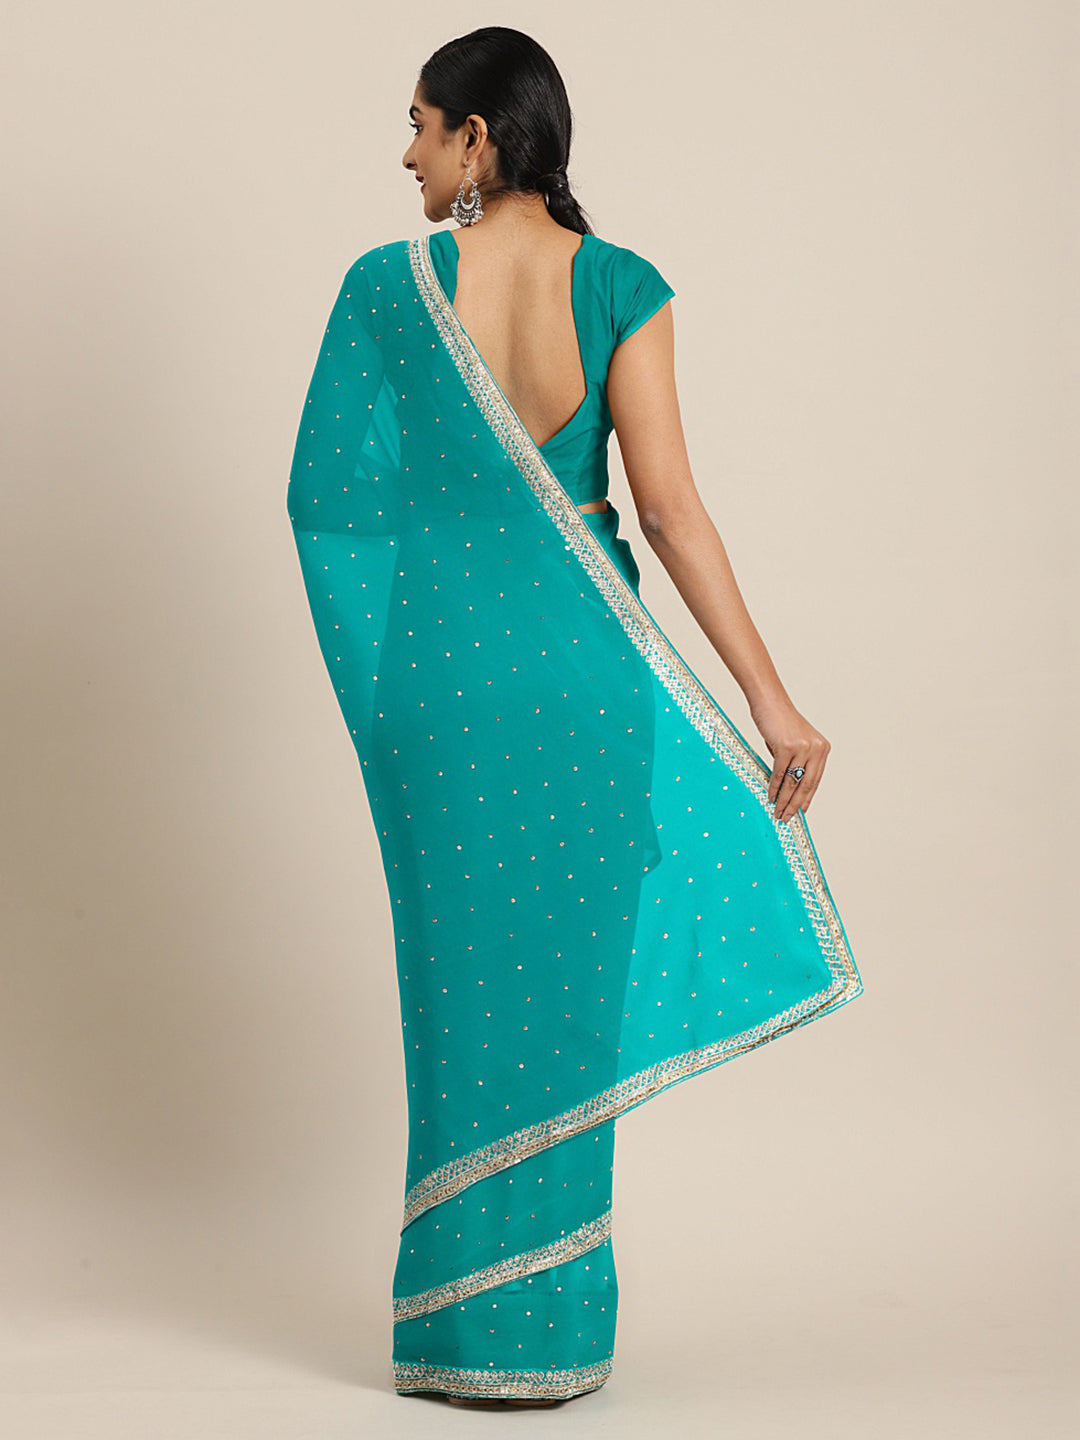 Neeru's Aqua Embellished Saree With Blouse